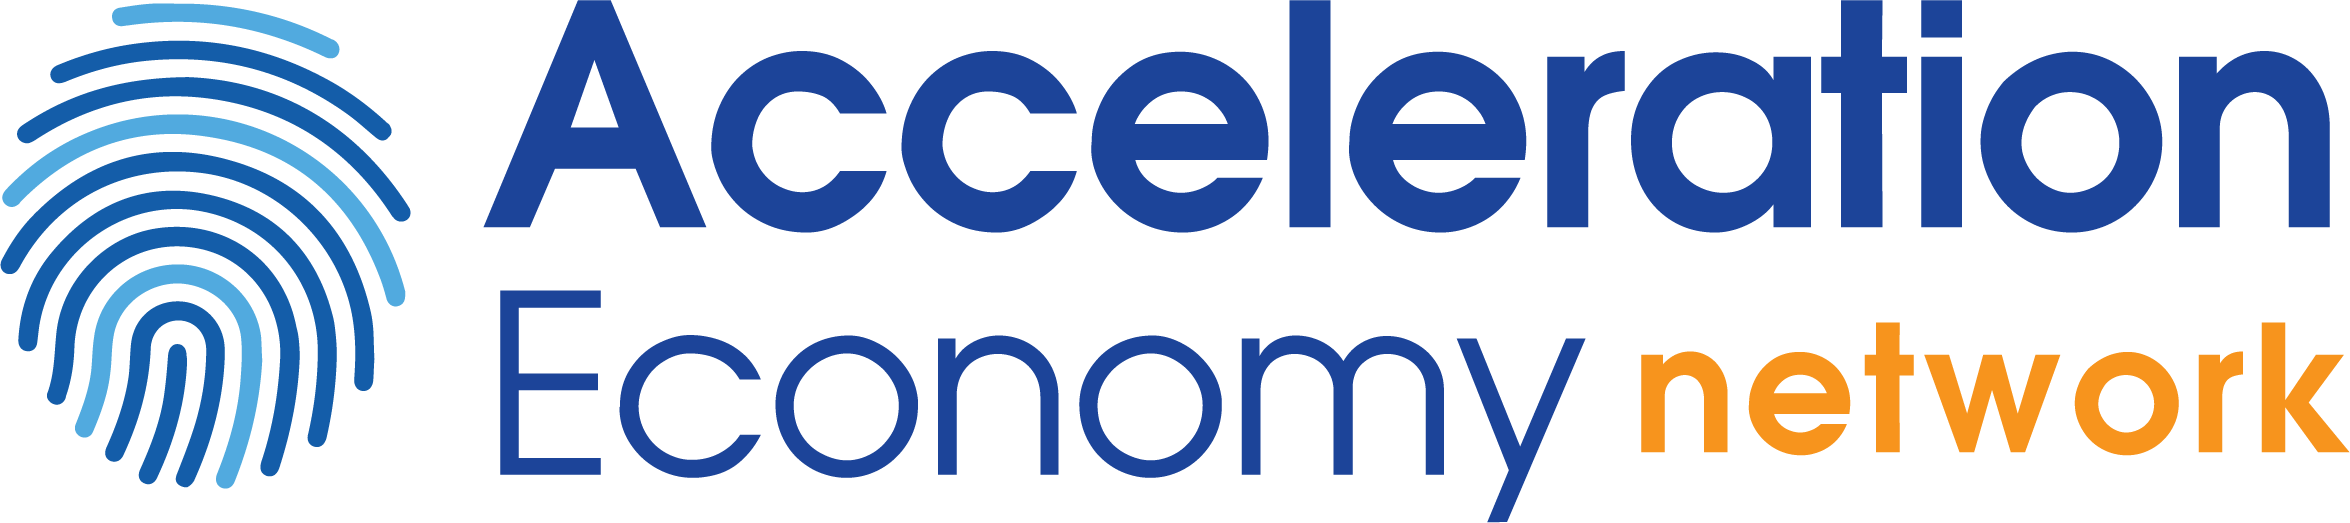 AE-network logo